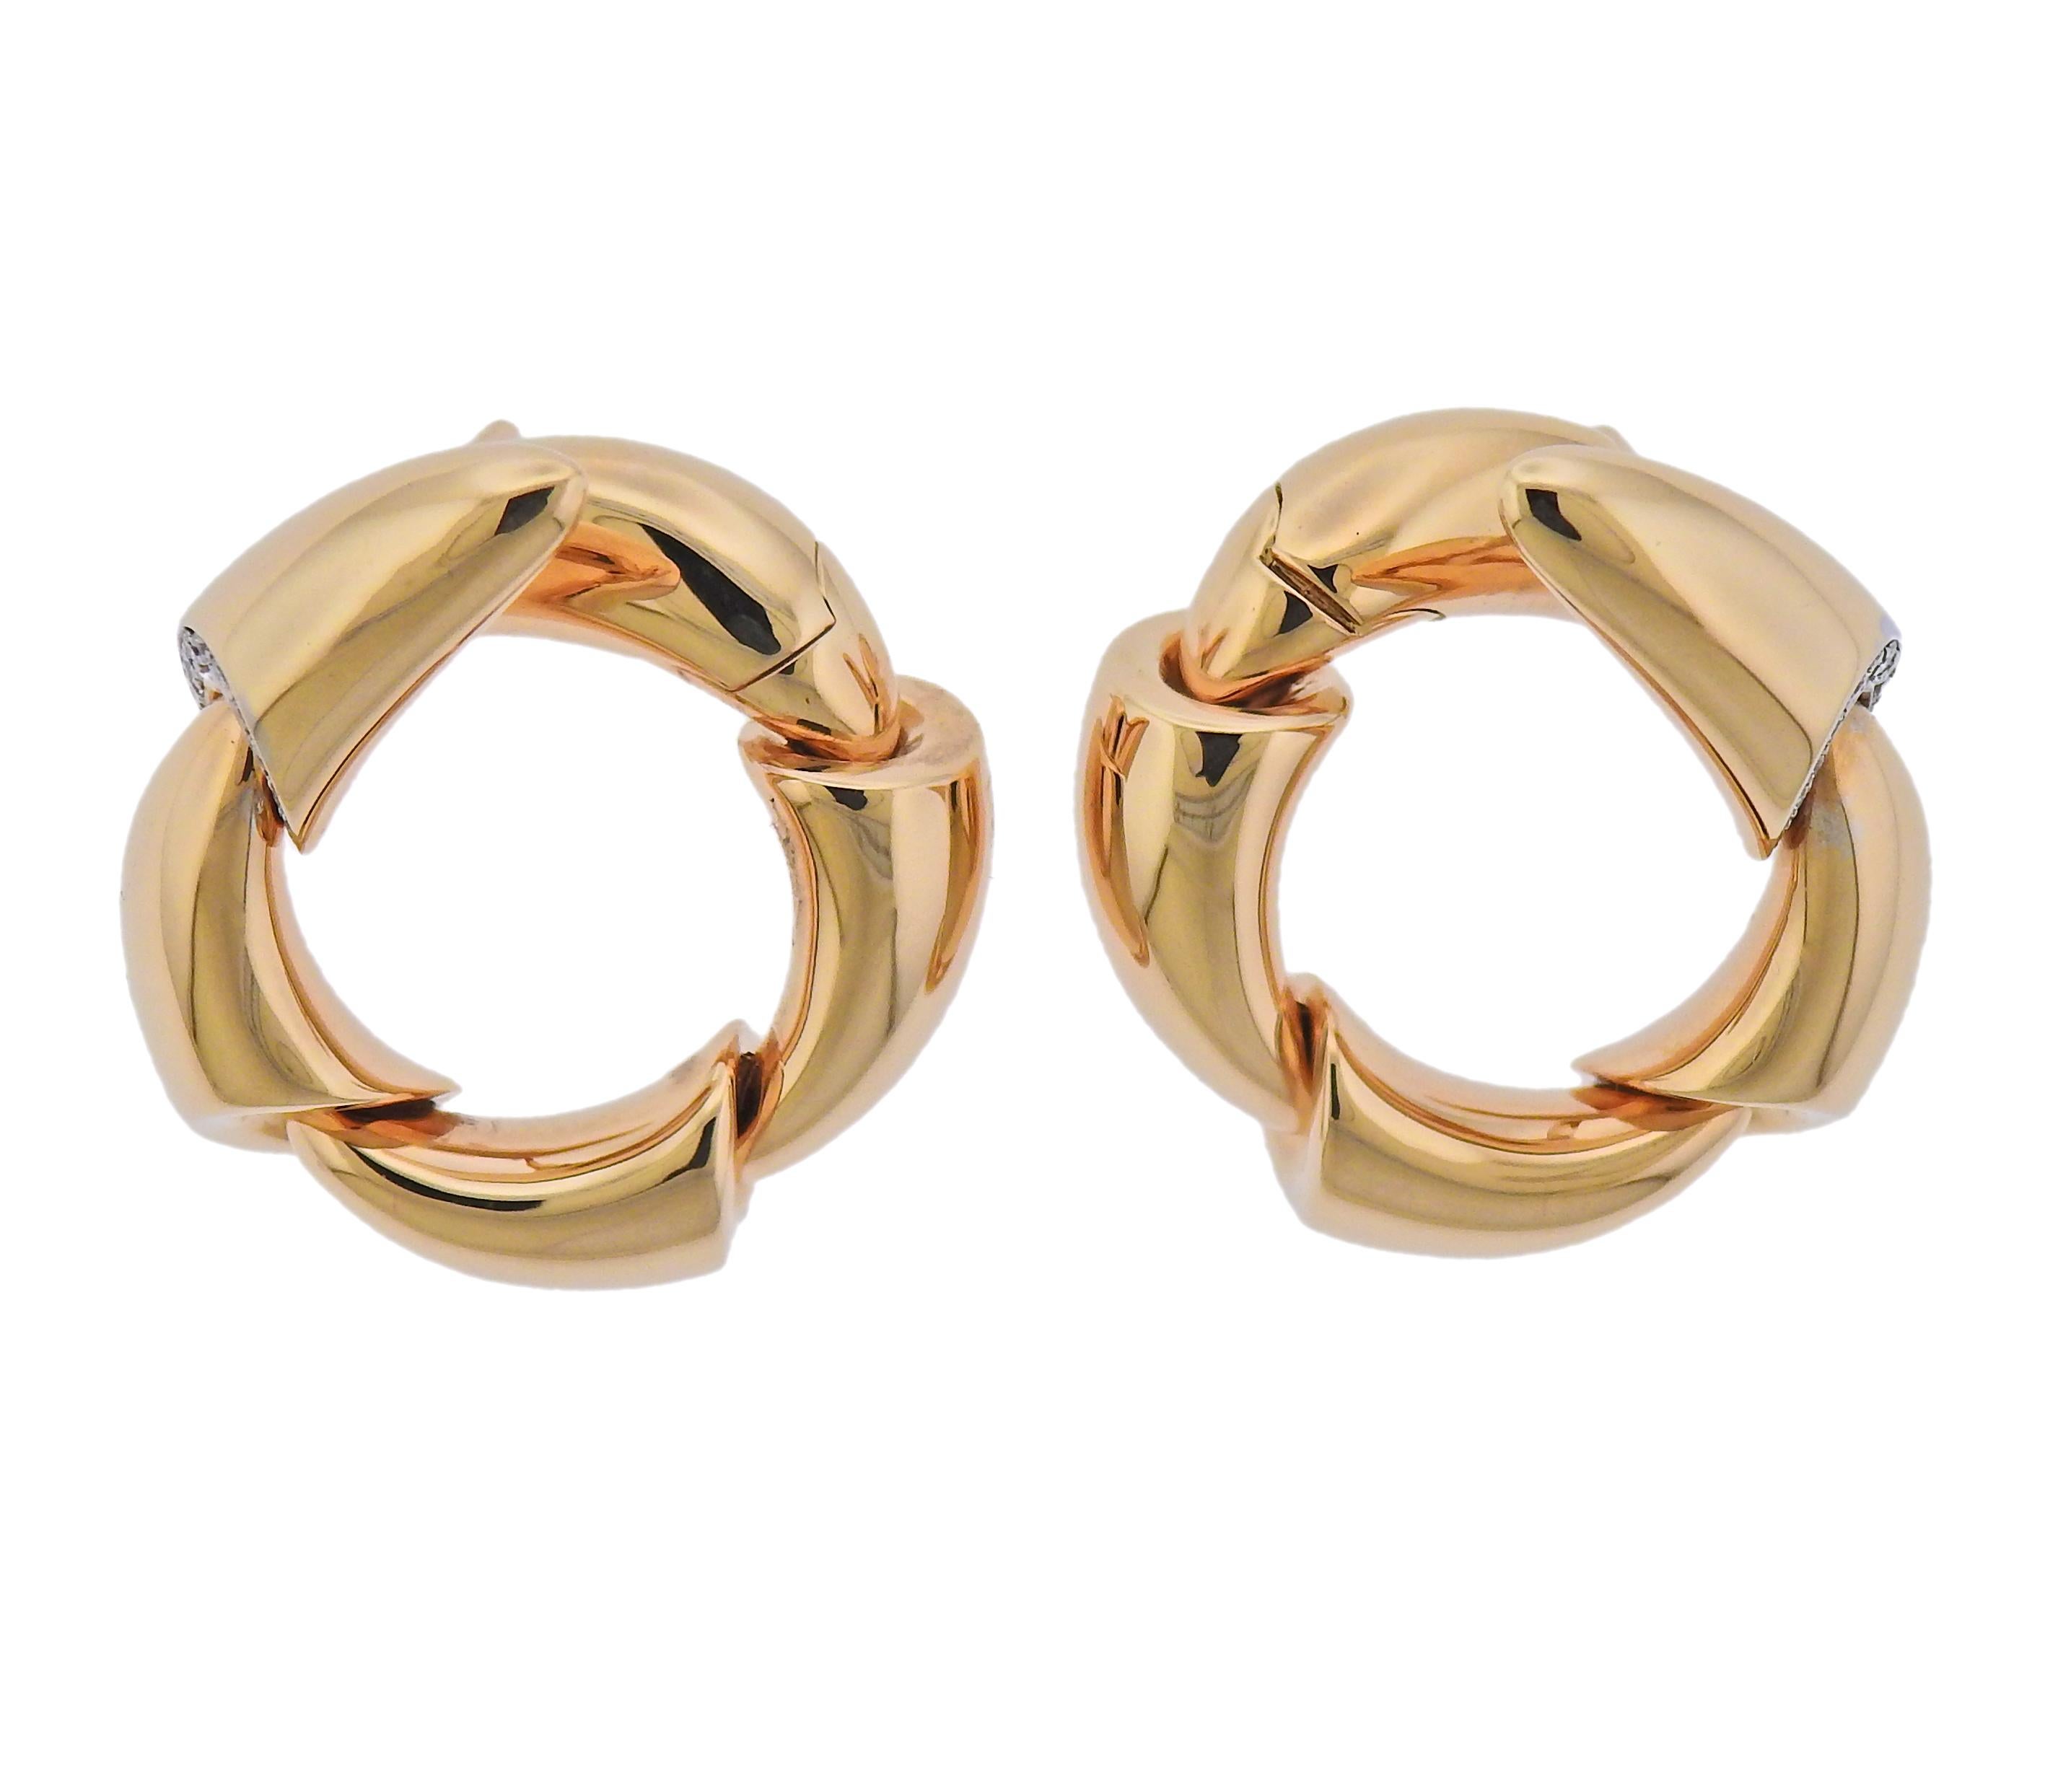 Vhernier 18k rose gold Calla earrings with approx. 0.09ctw in G/VS diamonds. Earrings are 21mm in diameter. Weight - 16 grams. Marked: Vhernier, 750, 279153.